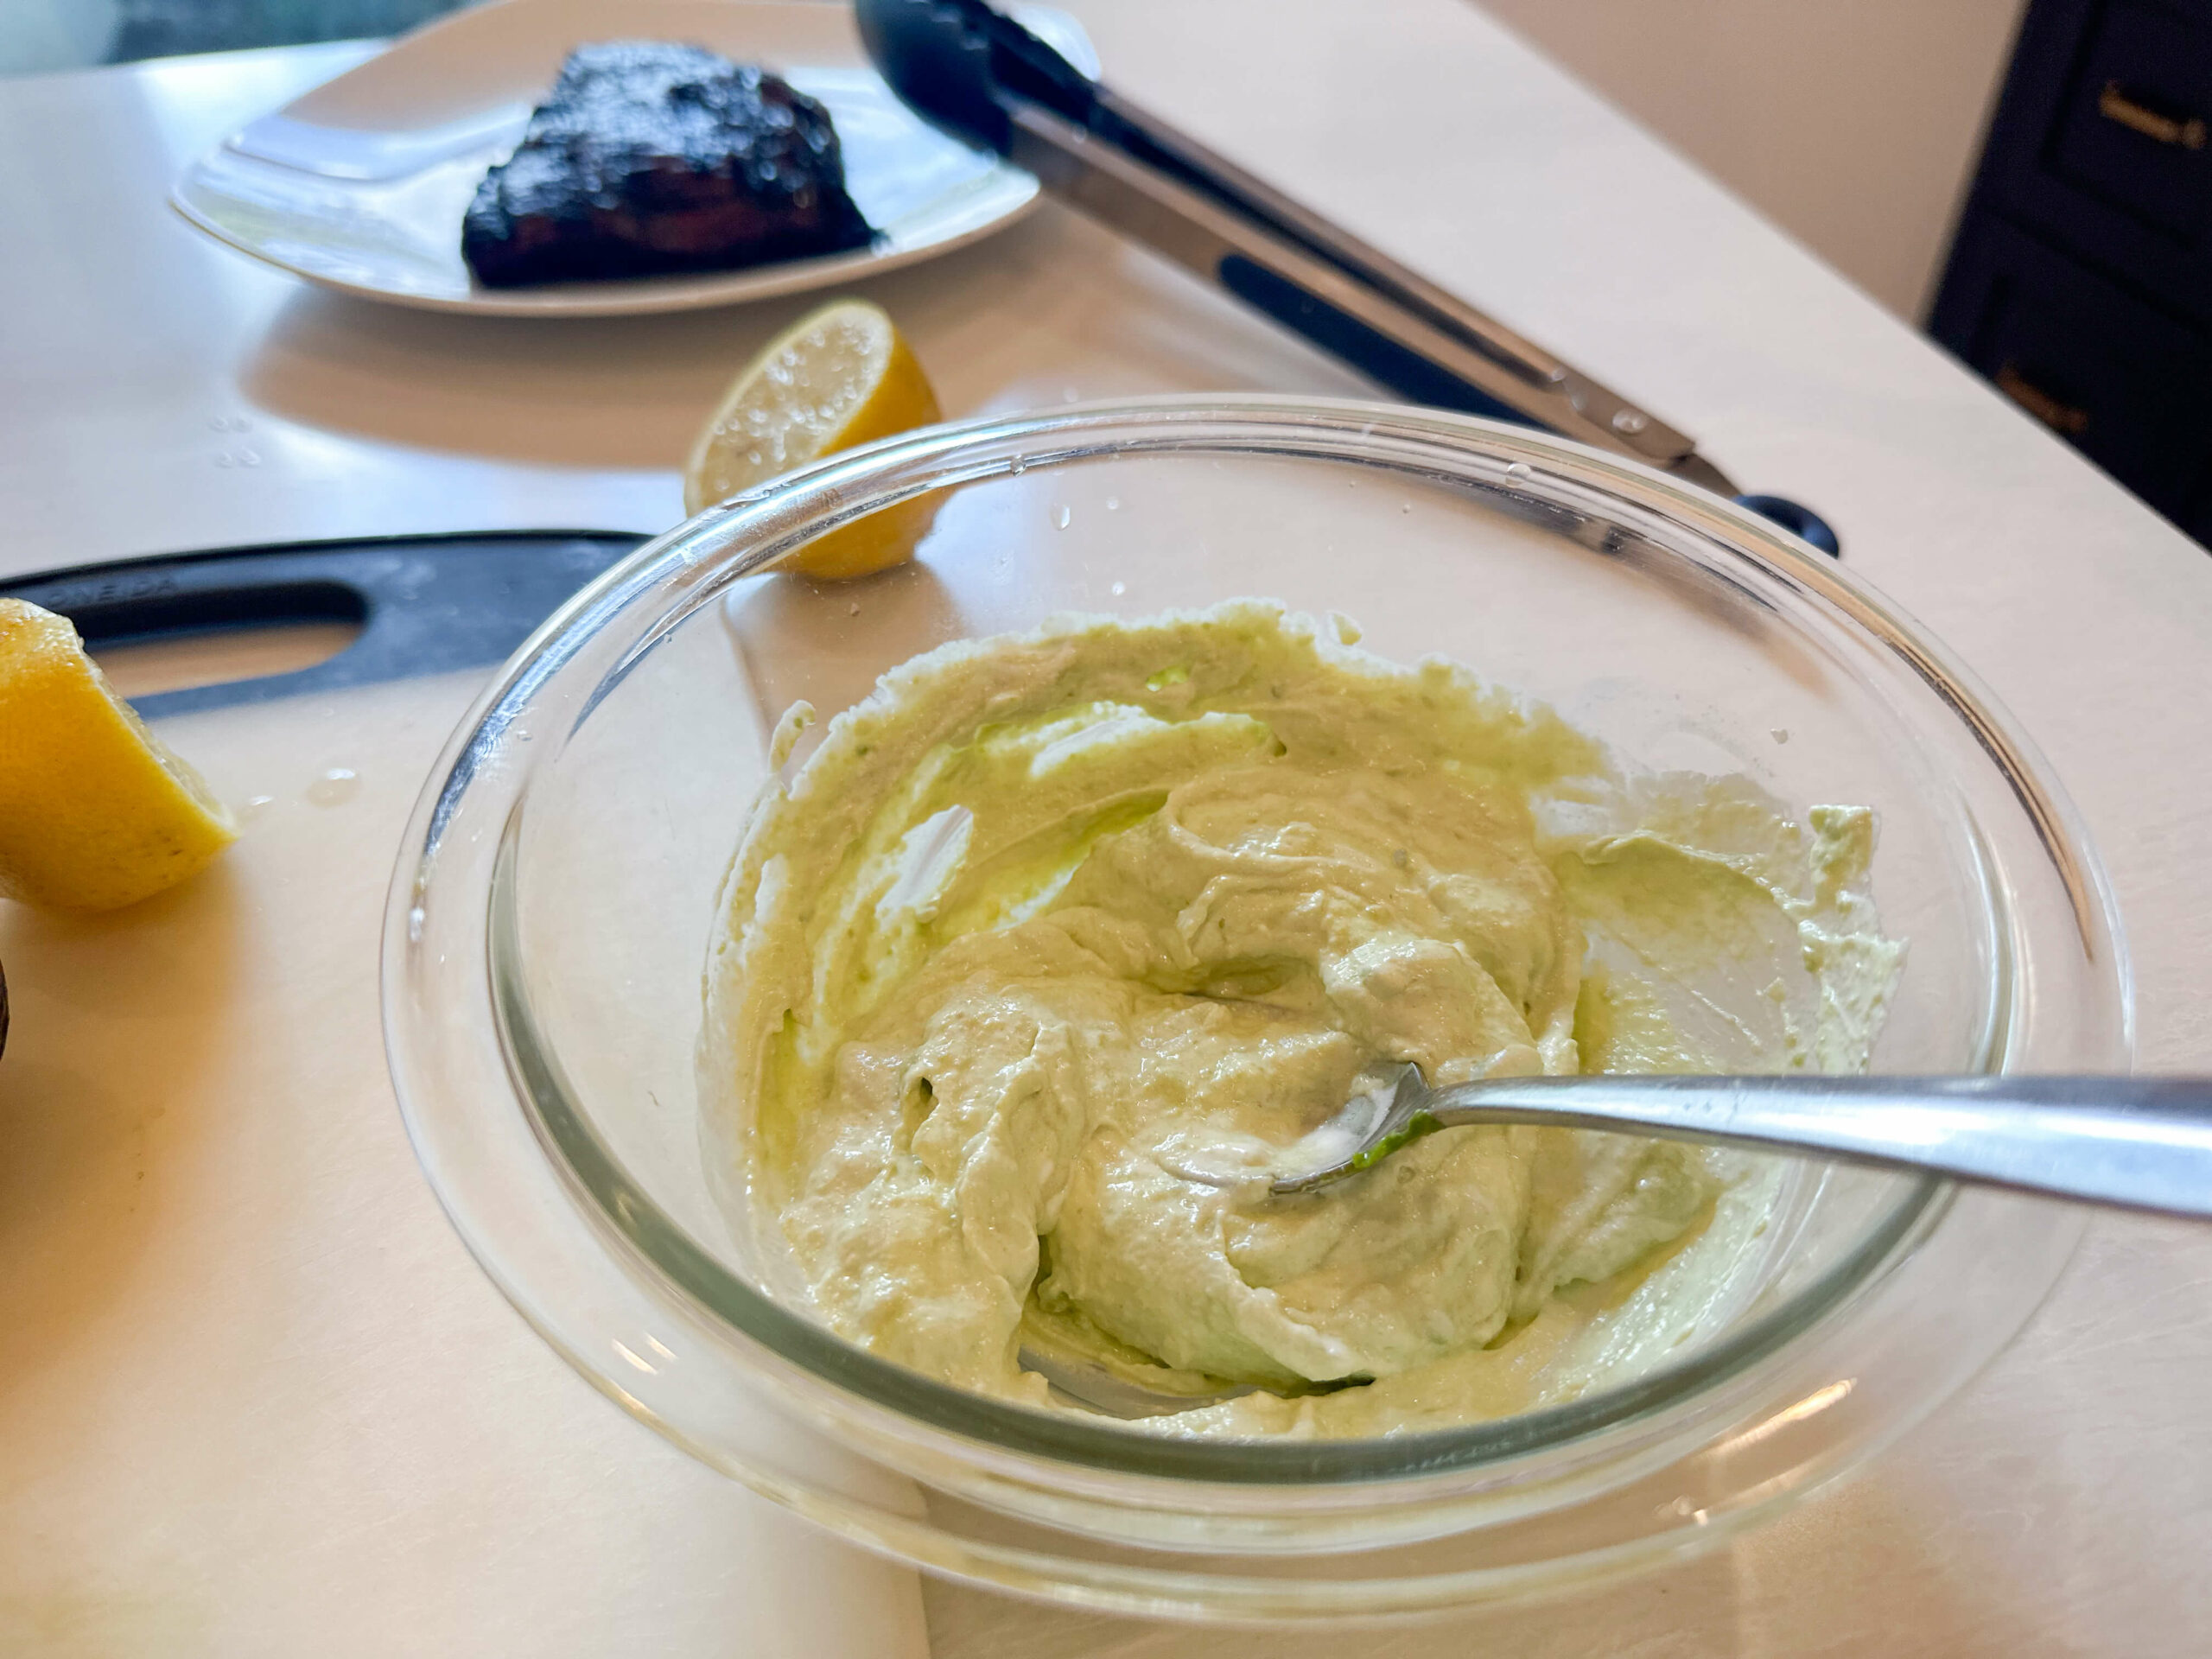 avocado cream ready and mixed in a bowl